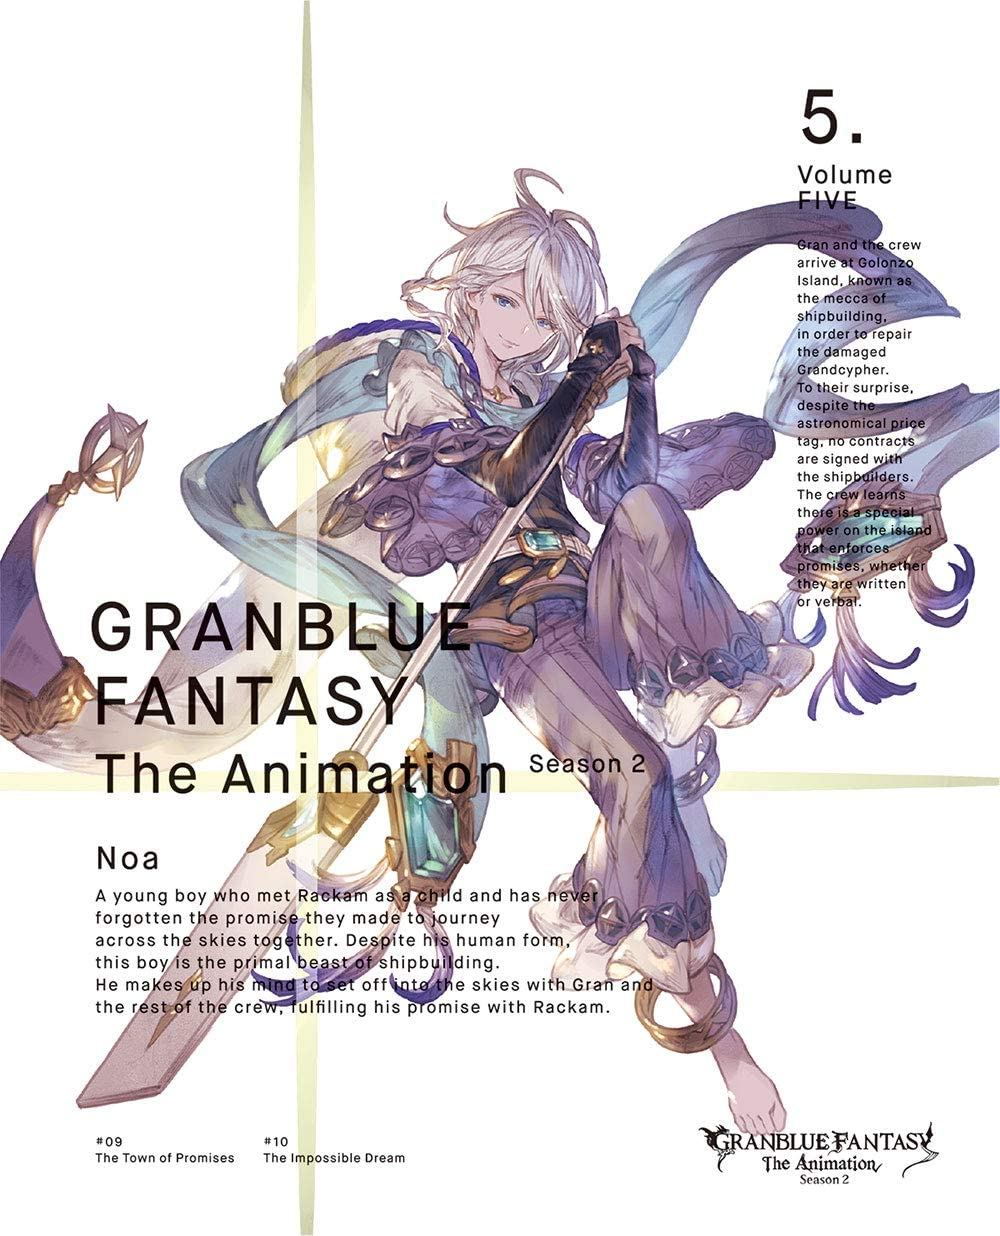 GRANBLUE FANTASY THE Animation Season 2 6 (Limited Edition) [DVD